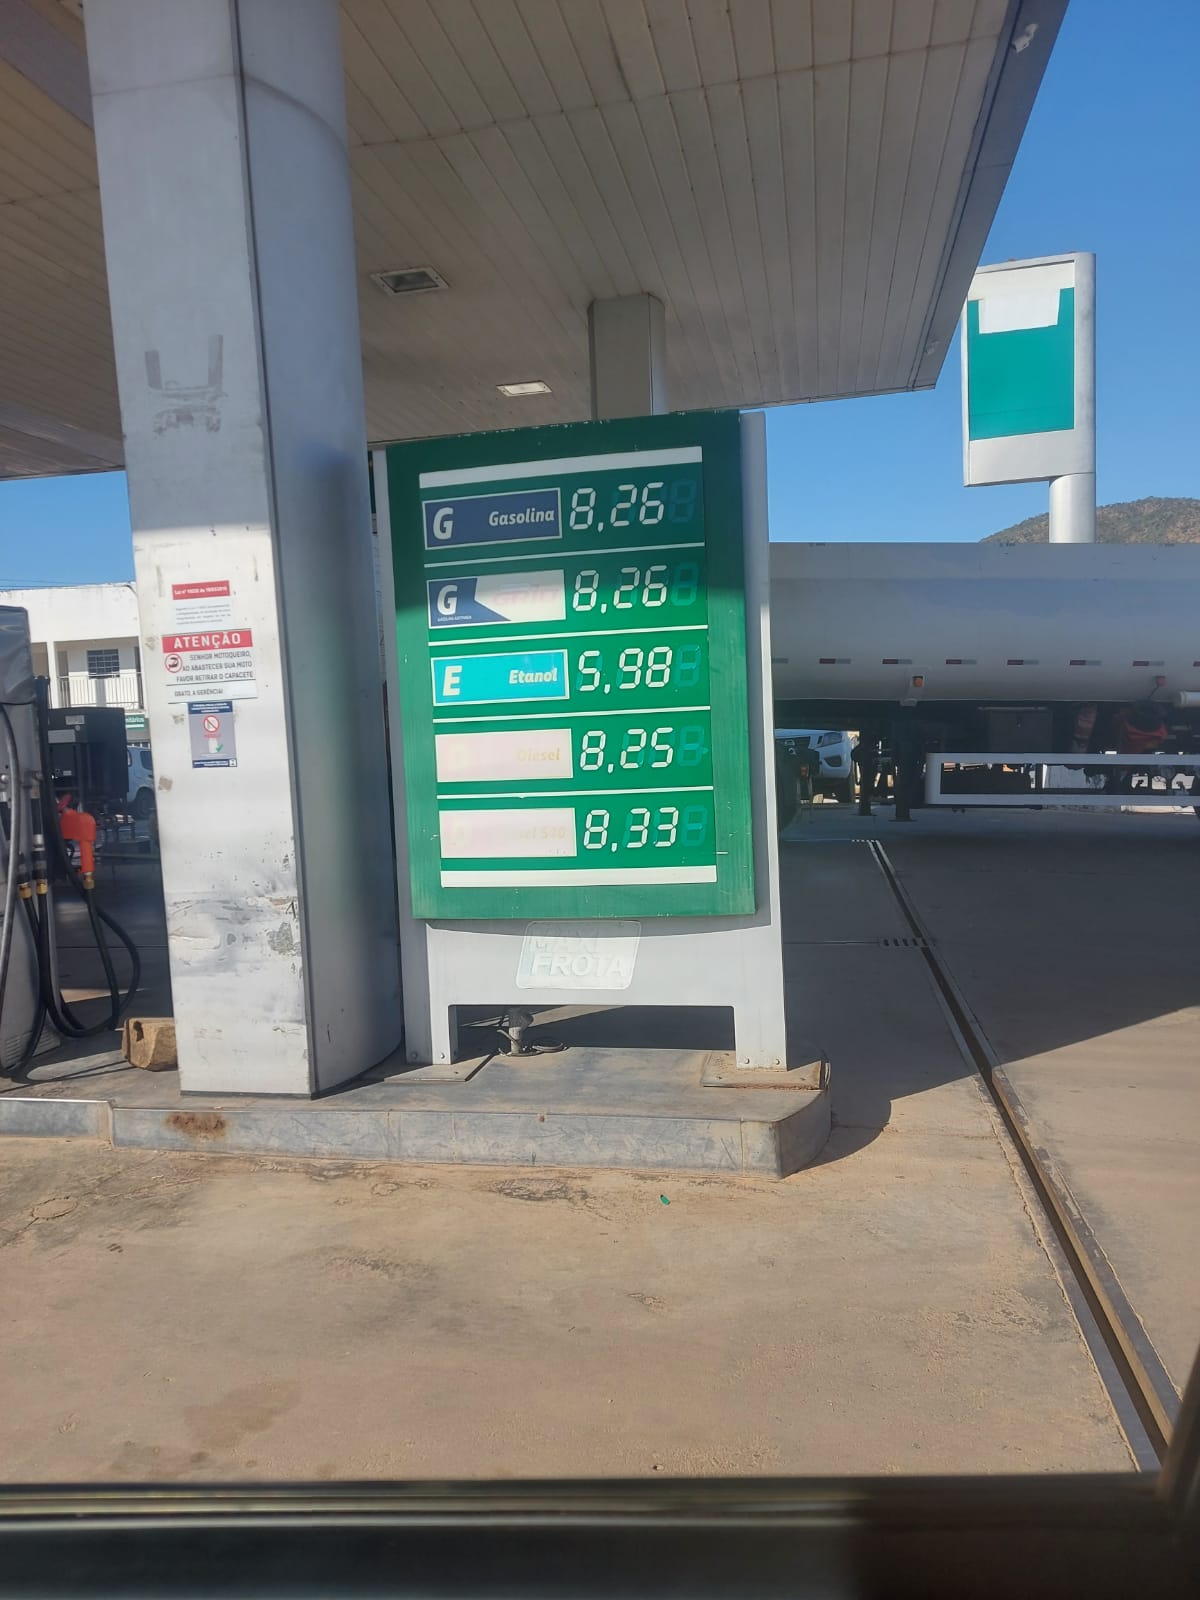 Diesel chega a R$ 8,33 em Campos Belos (GO); gasolina a R$ 8,26